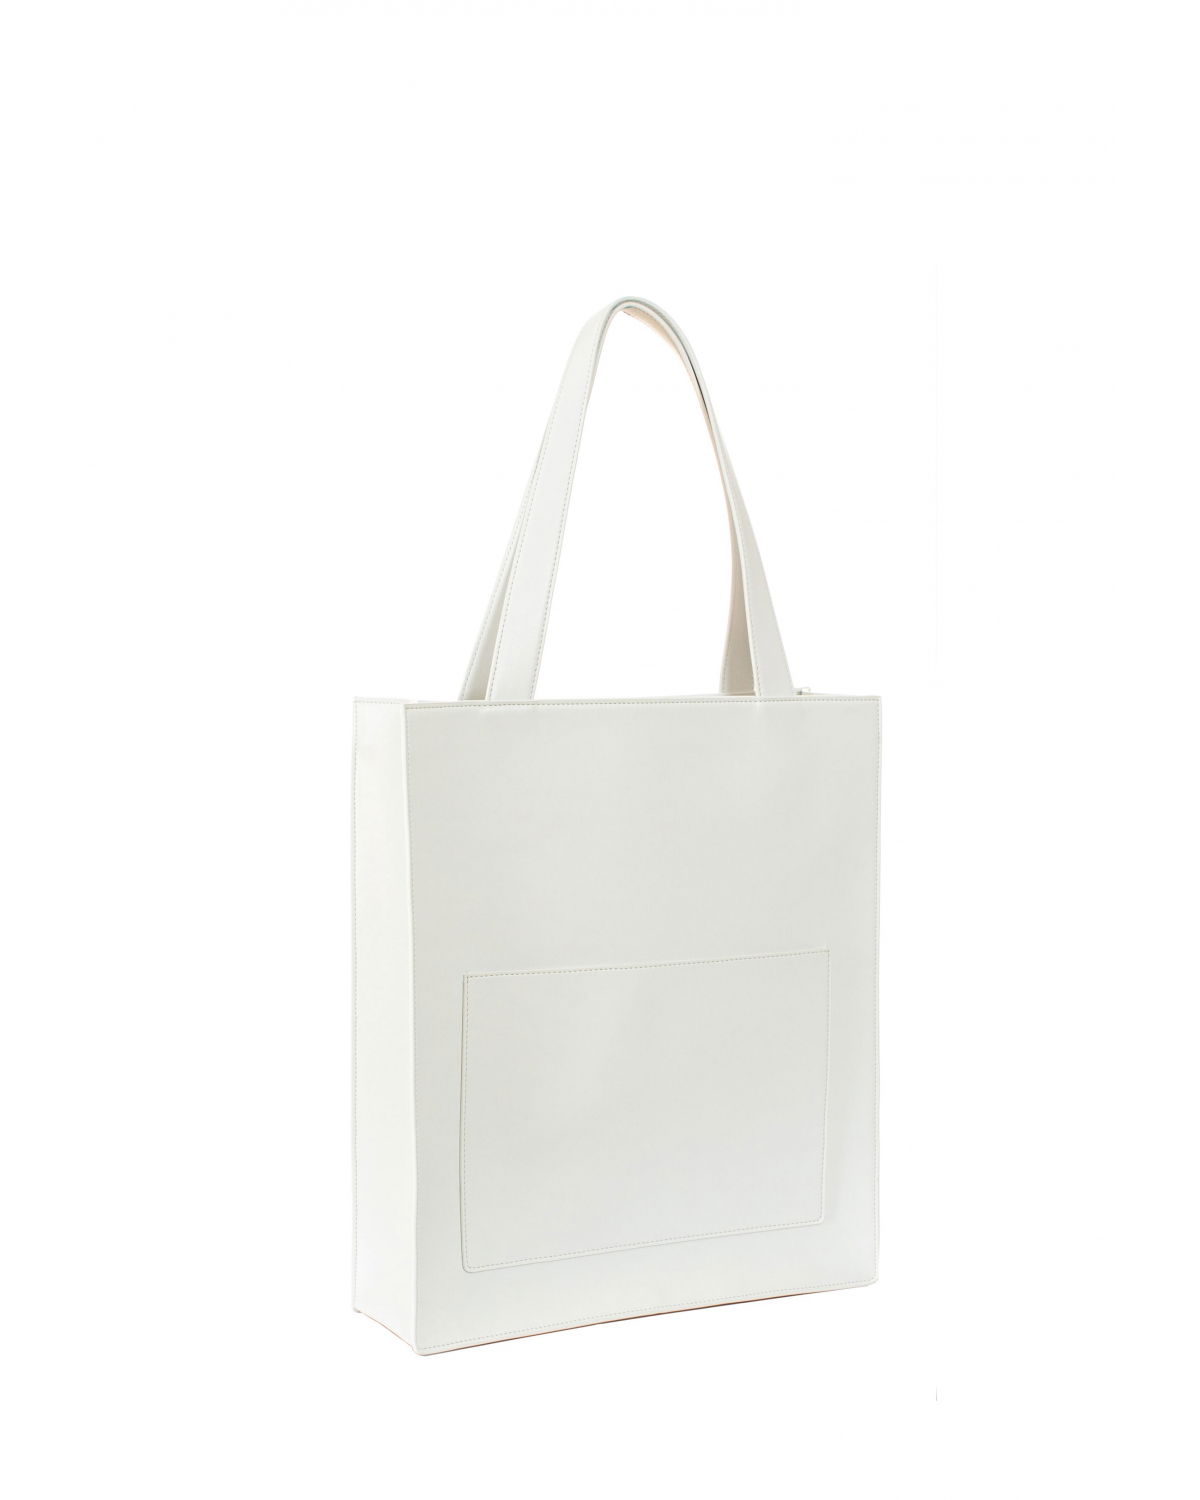 White Appleskin shopper bag | | Genny